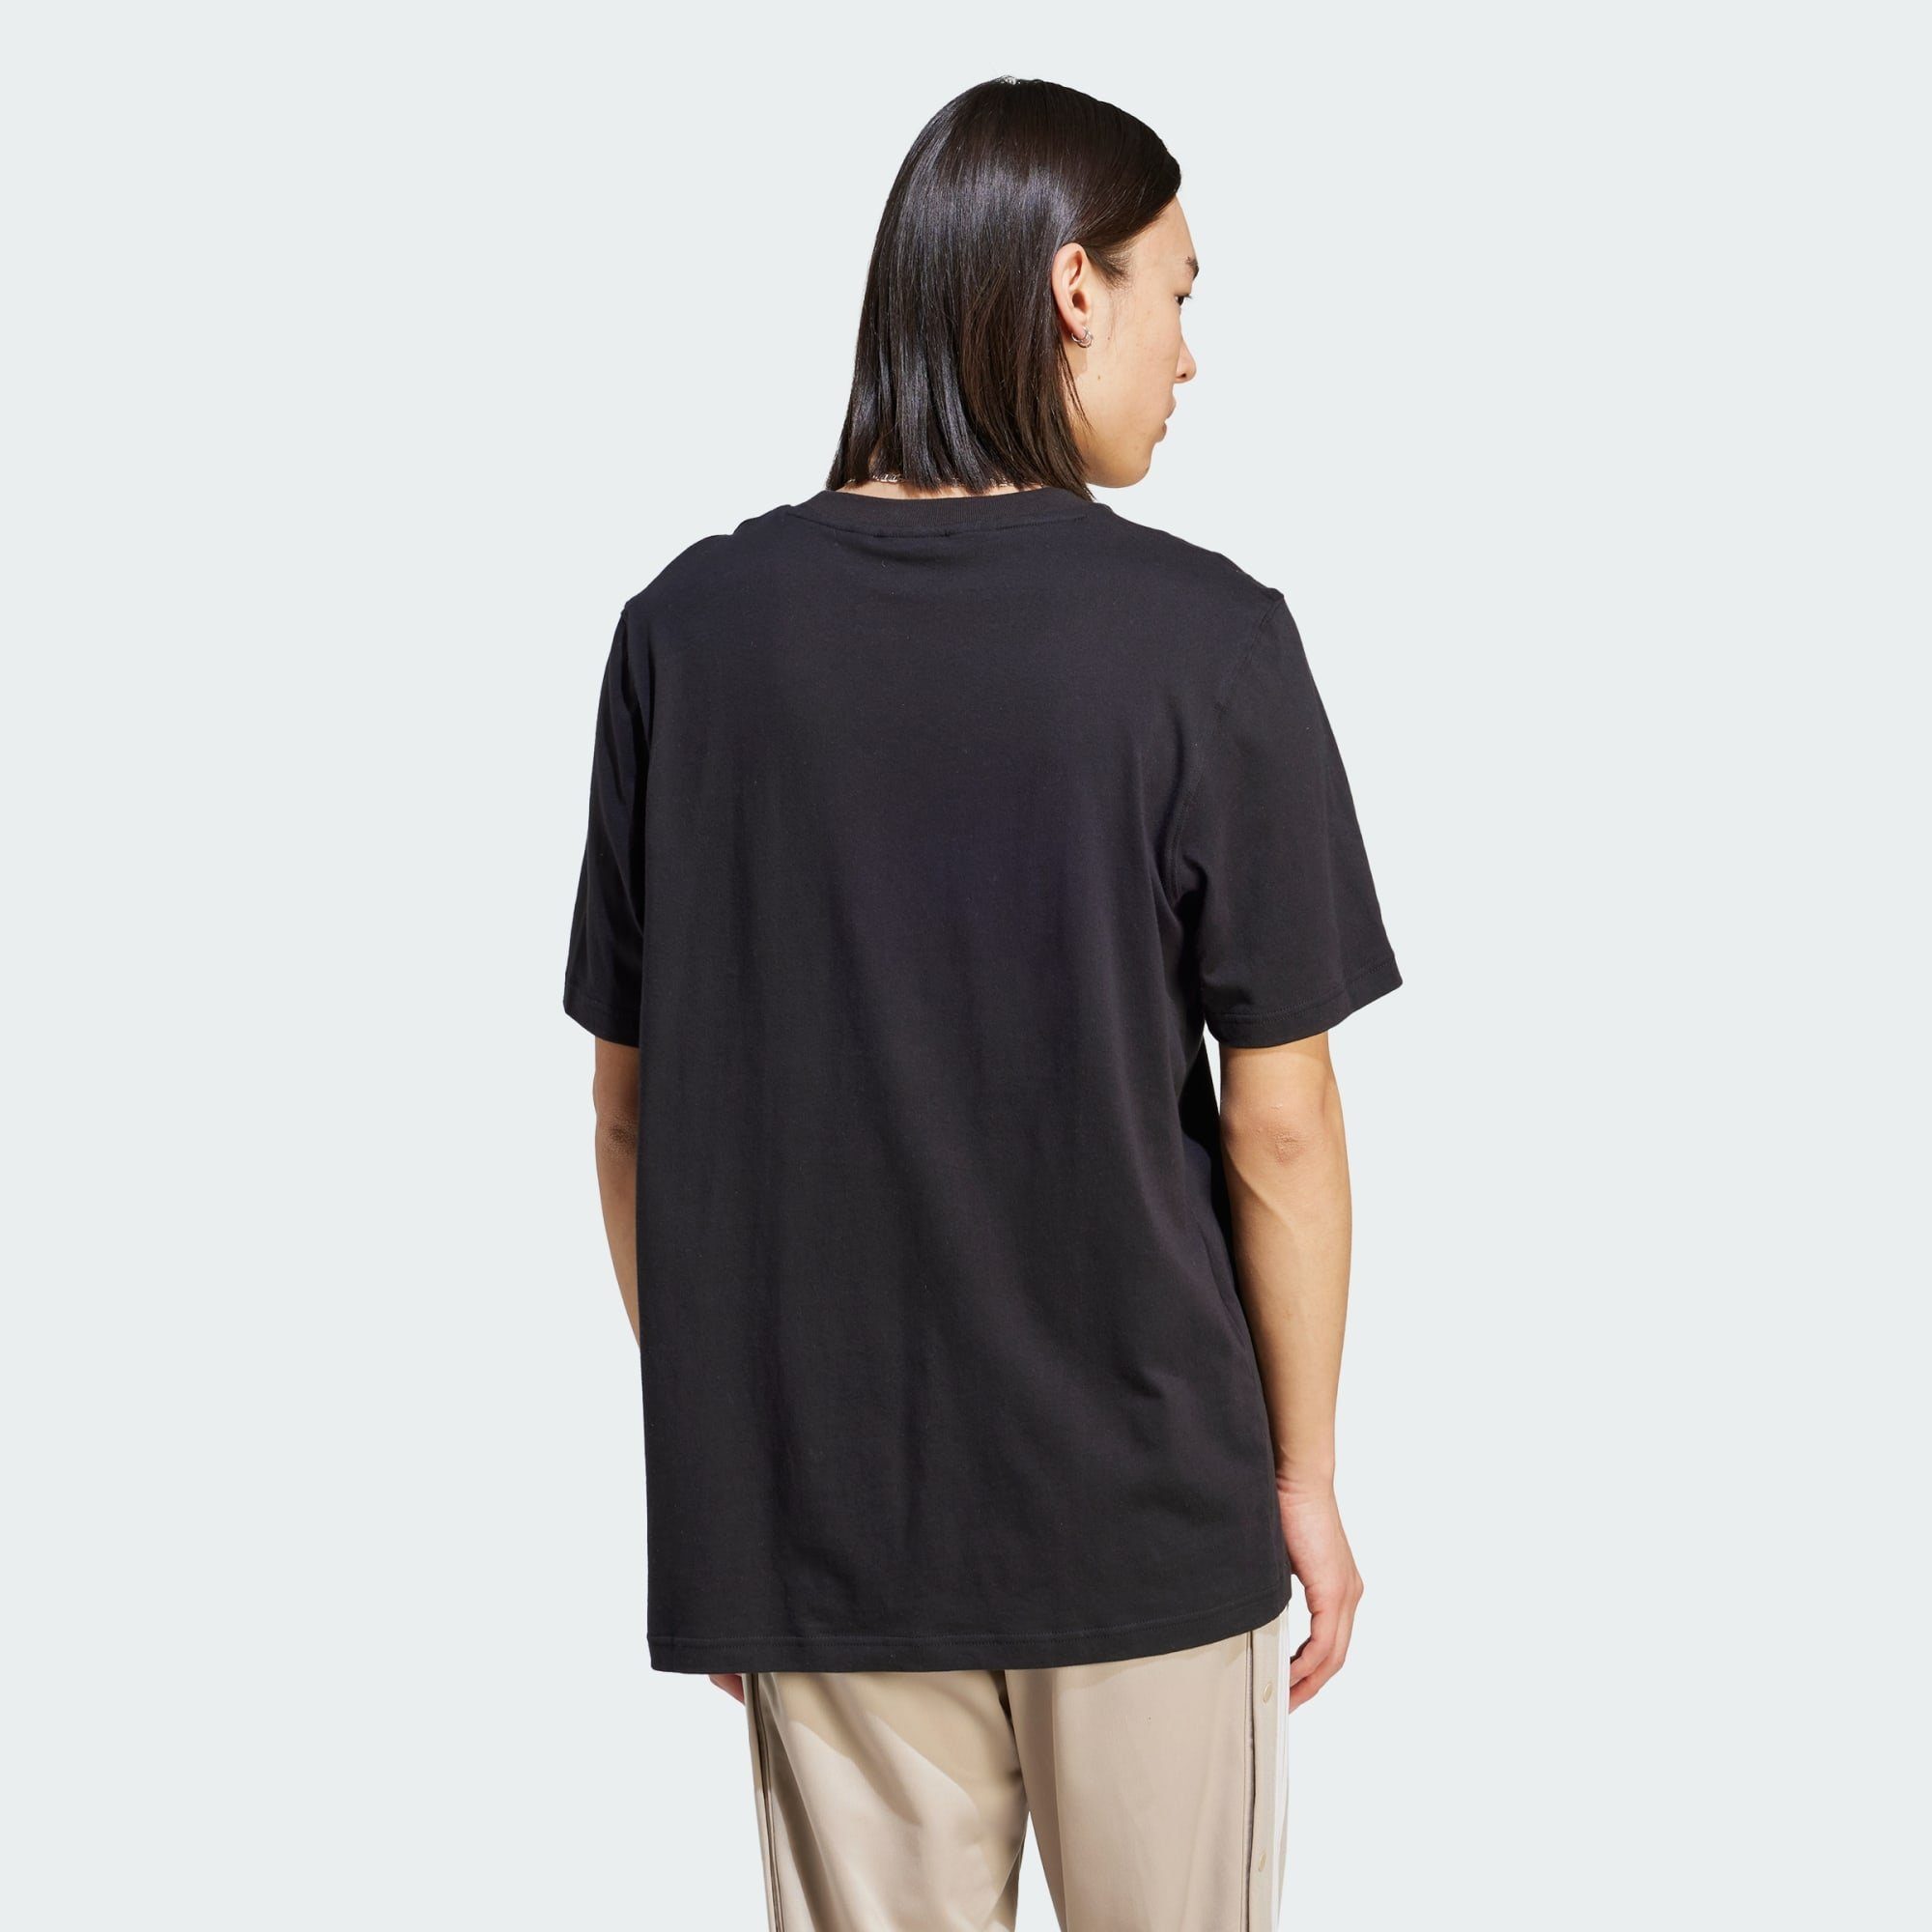 Originals ESSENTIALS TREFOIL White T-SHIRT Black T-Shirt / adidas